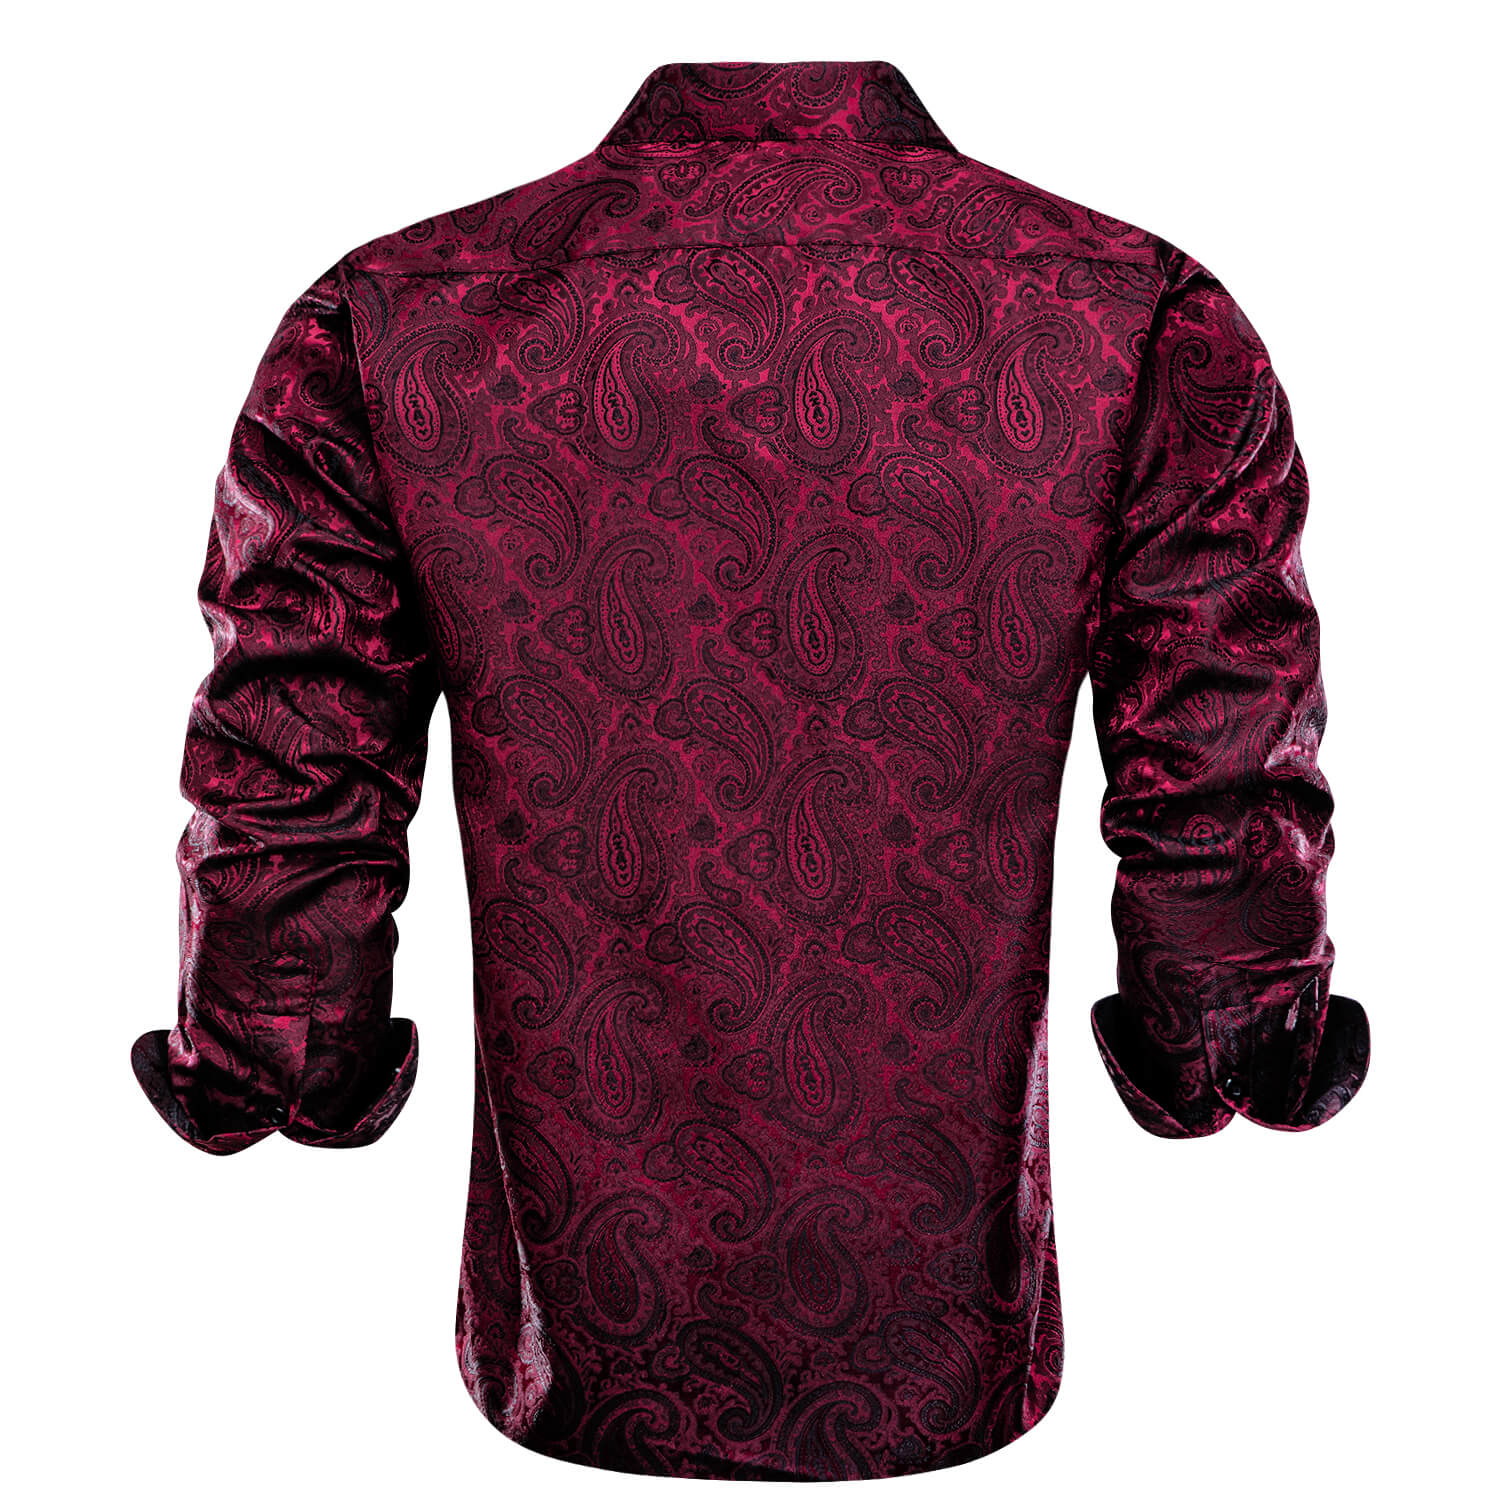 Hi-Tie Button Down Shirt Dark Red Jacquard Paisley Silk Men's Long Sleeve Shirt